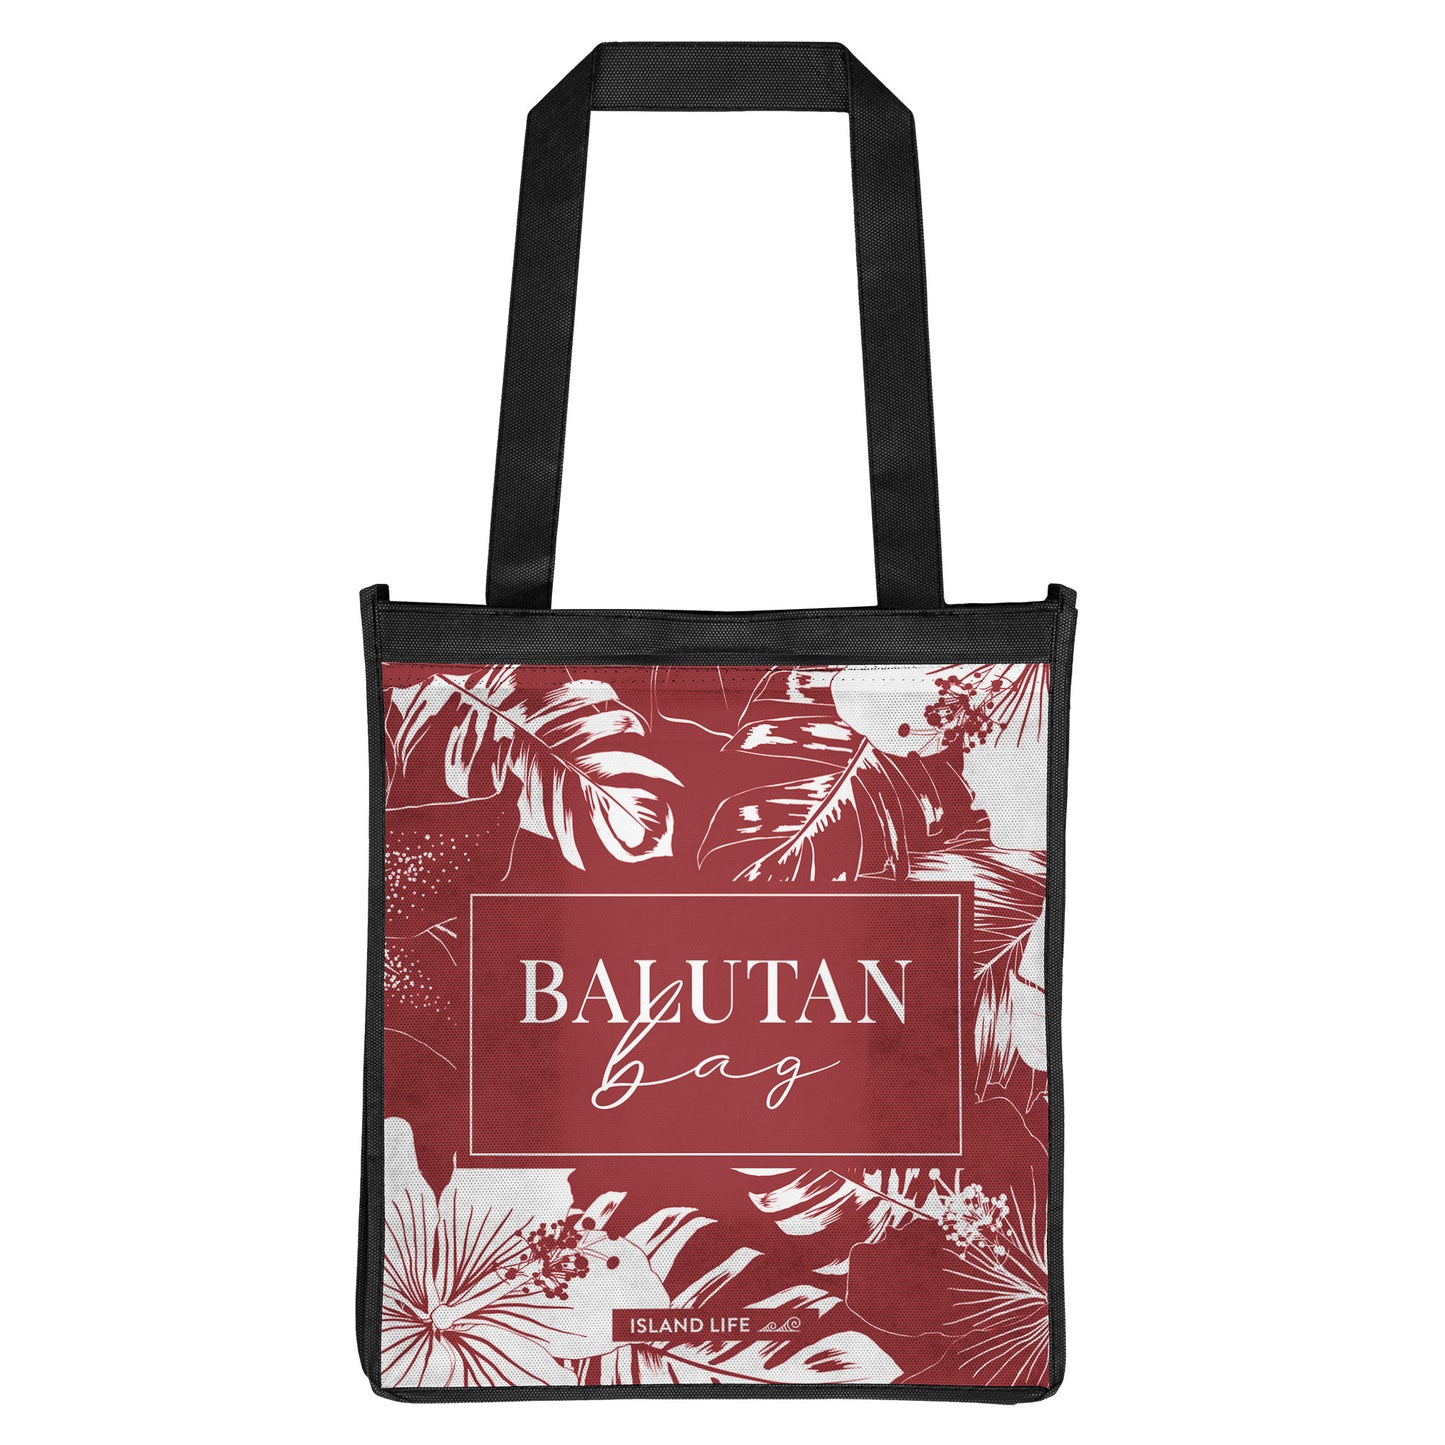 Balutan Bag Guam CNMI Red Floral Grocery Tote Bag